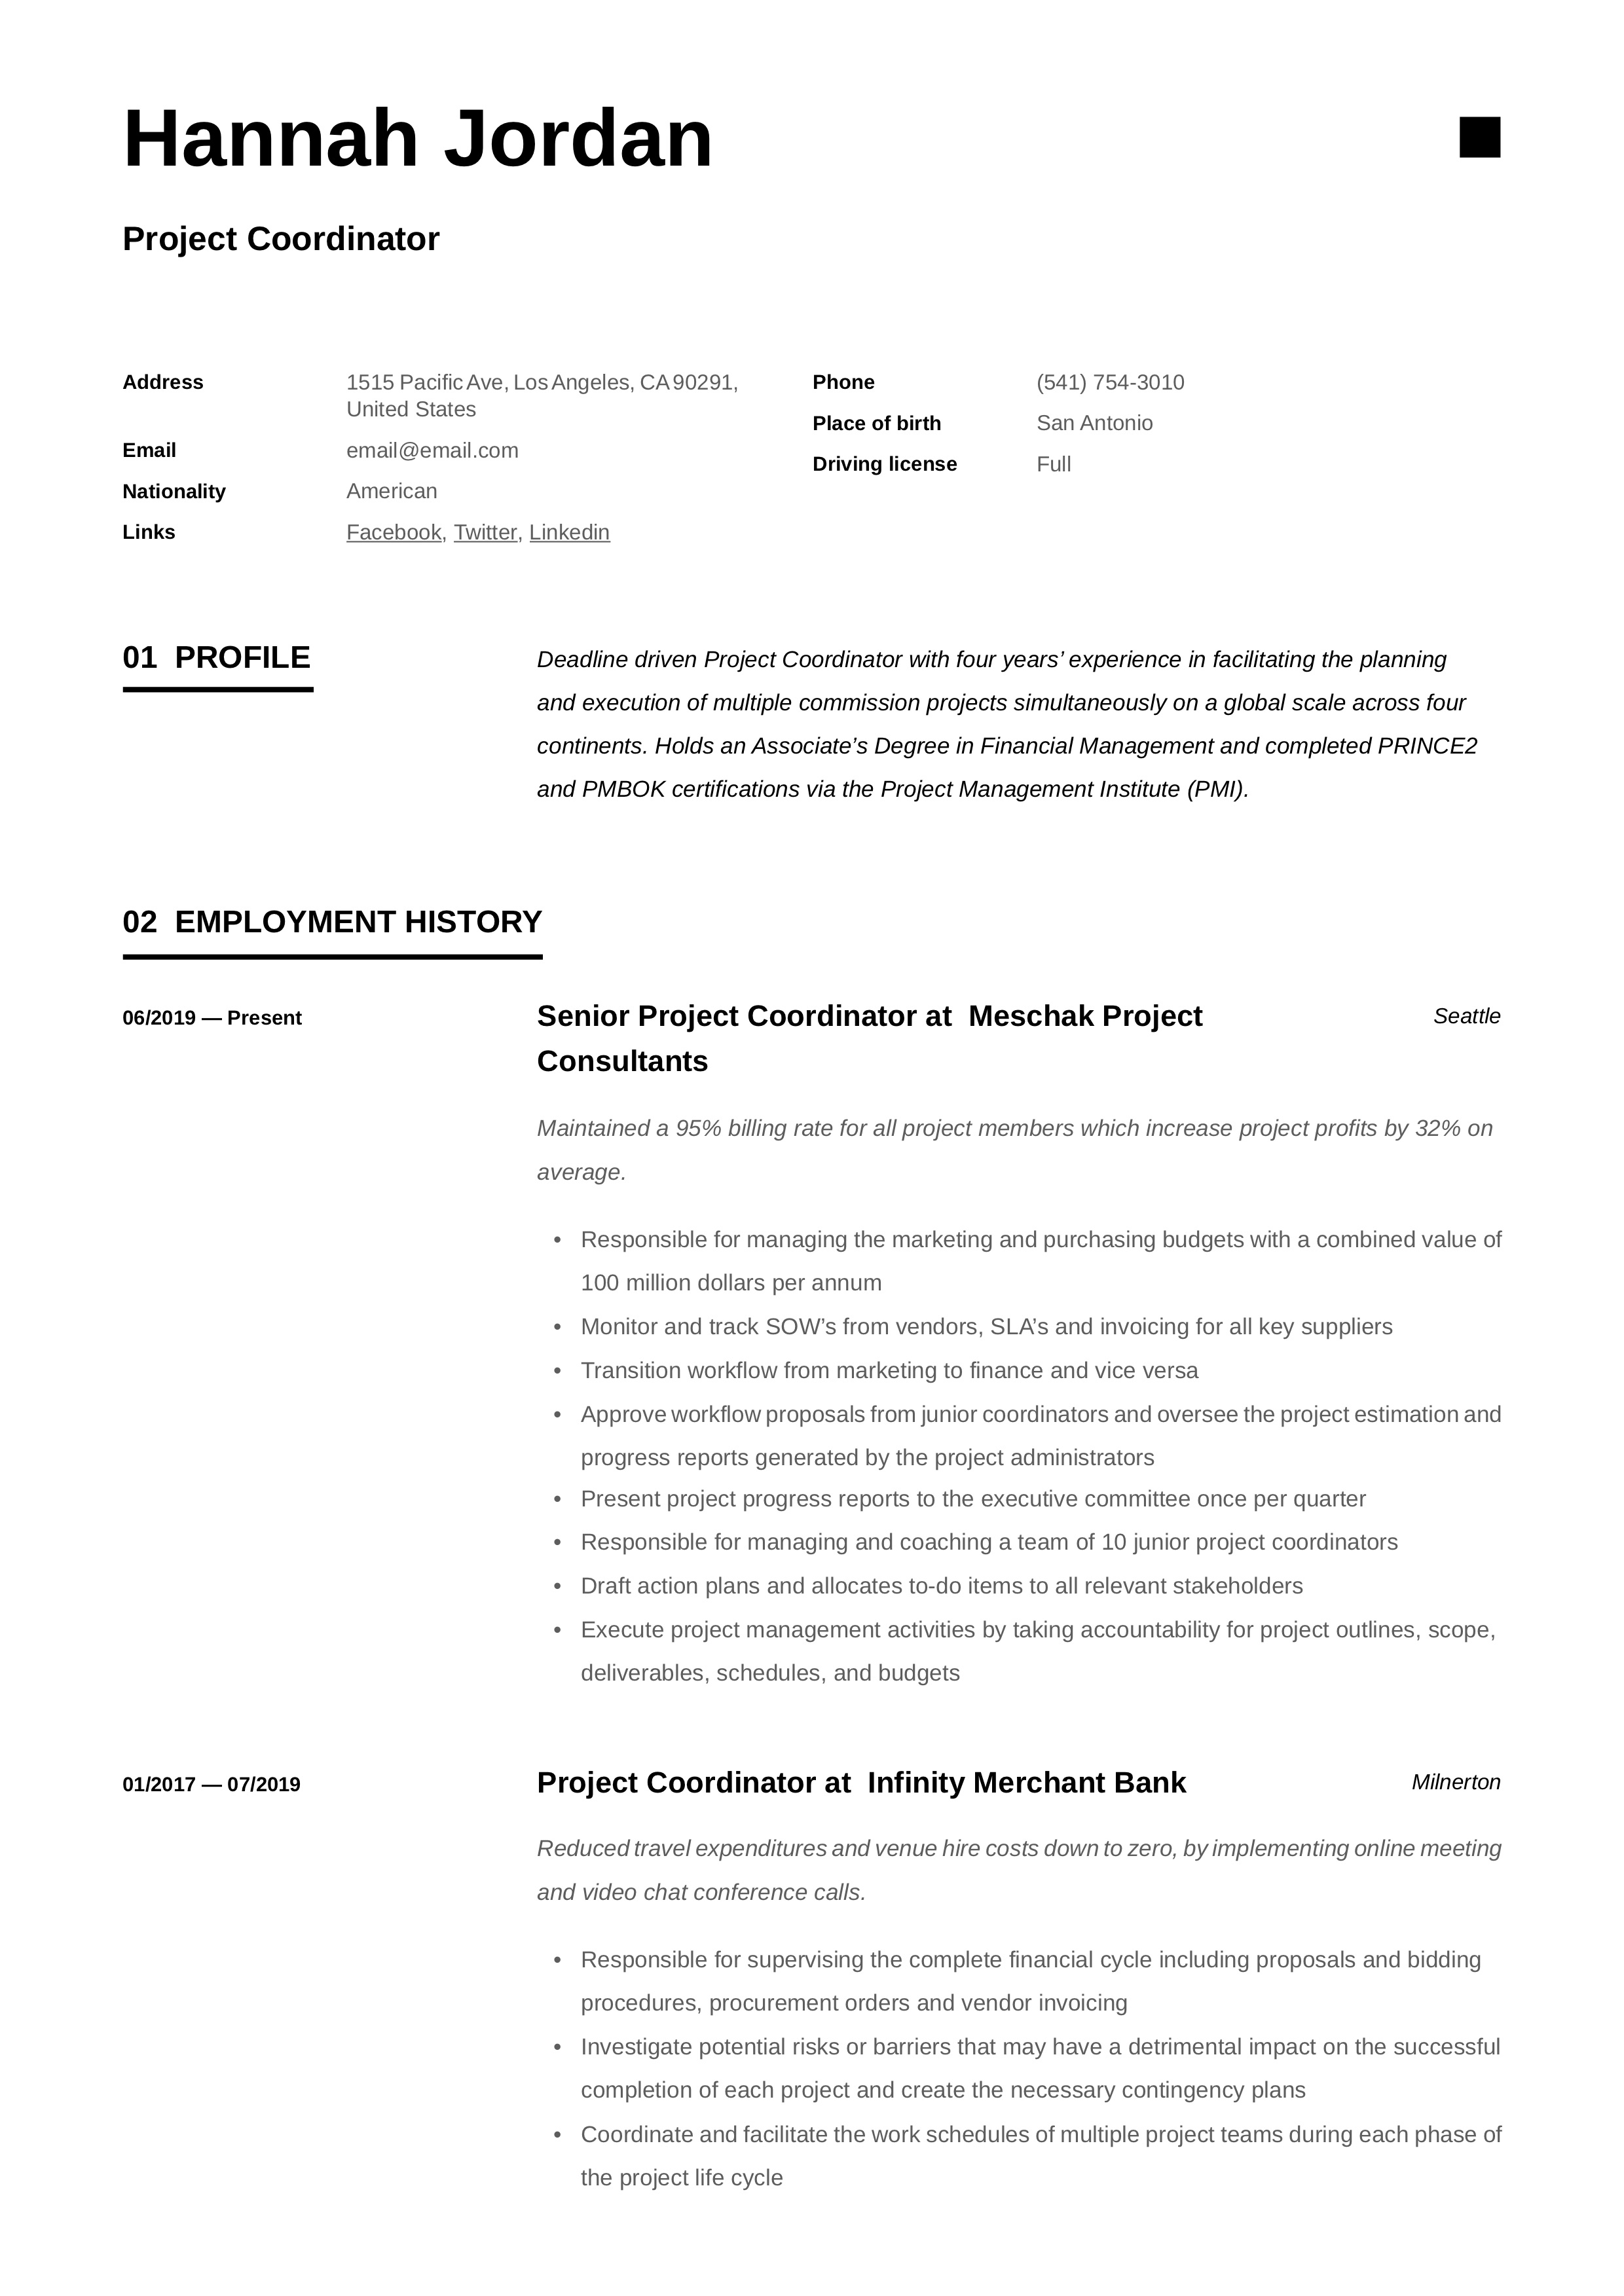 Resume Project Coordinator